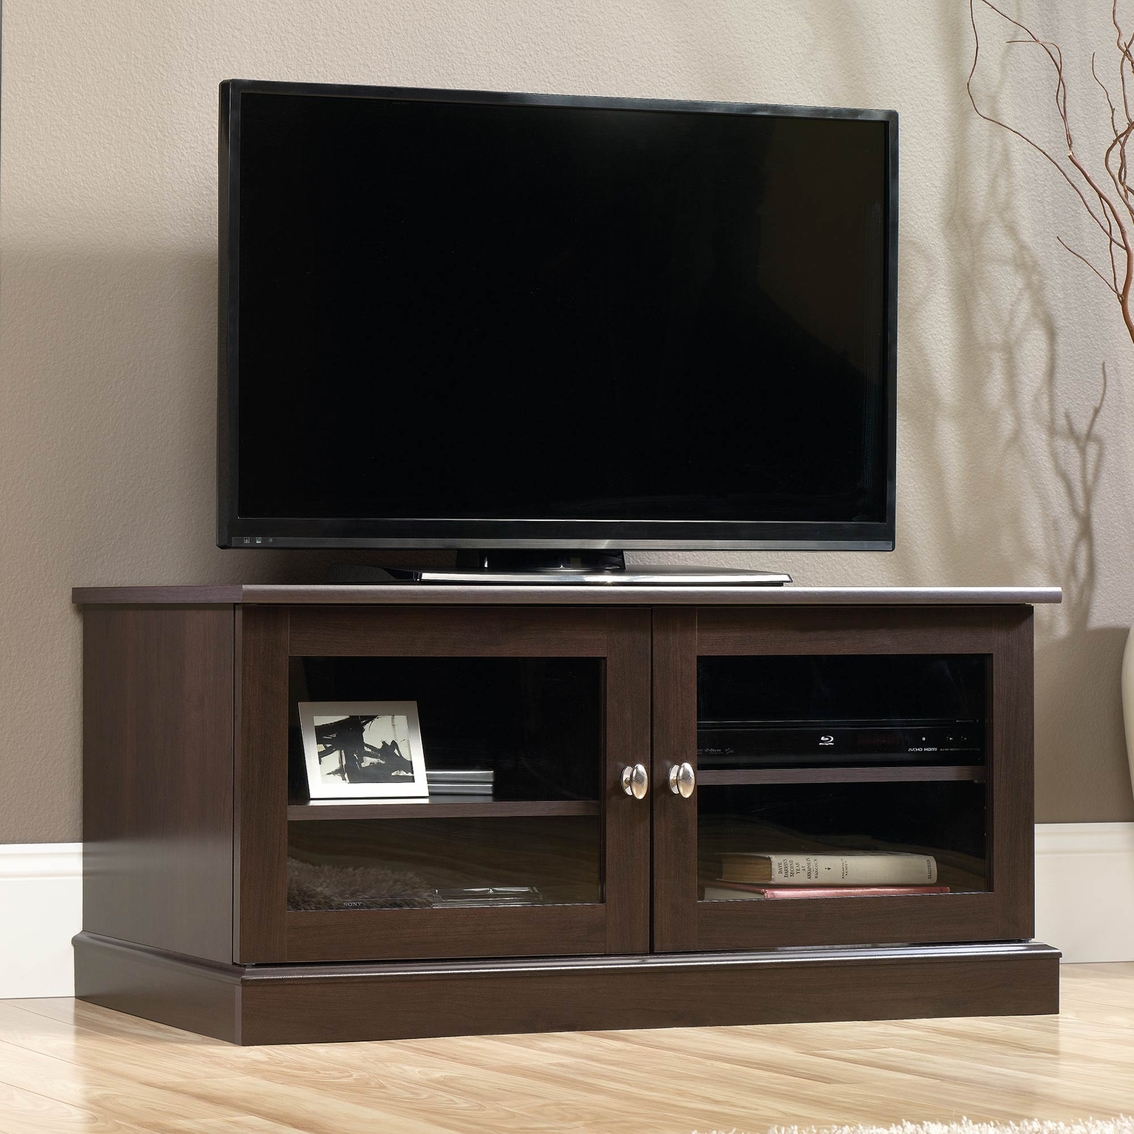 Sauder Tv Stand Credenza | Media Furniture | Home ...